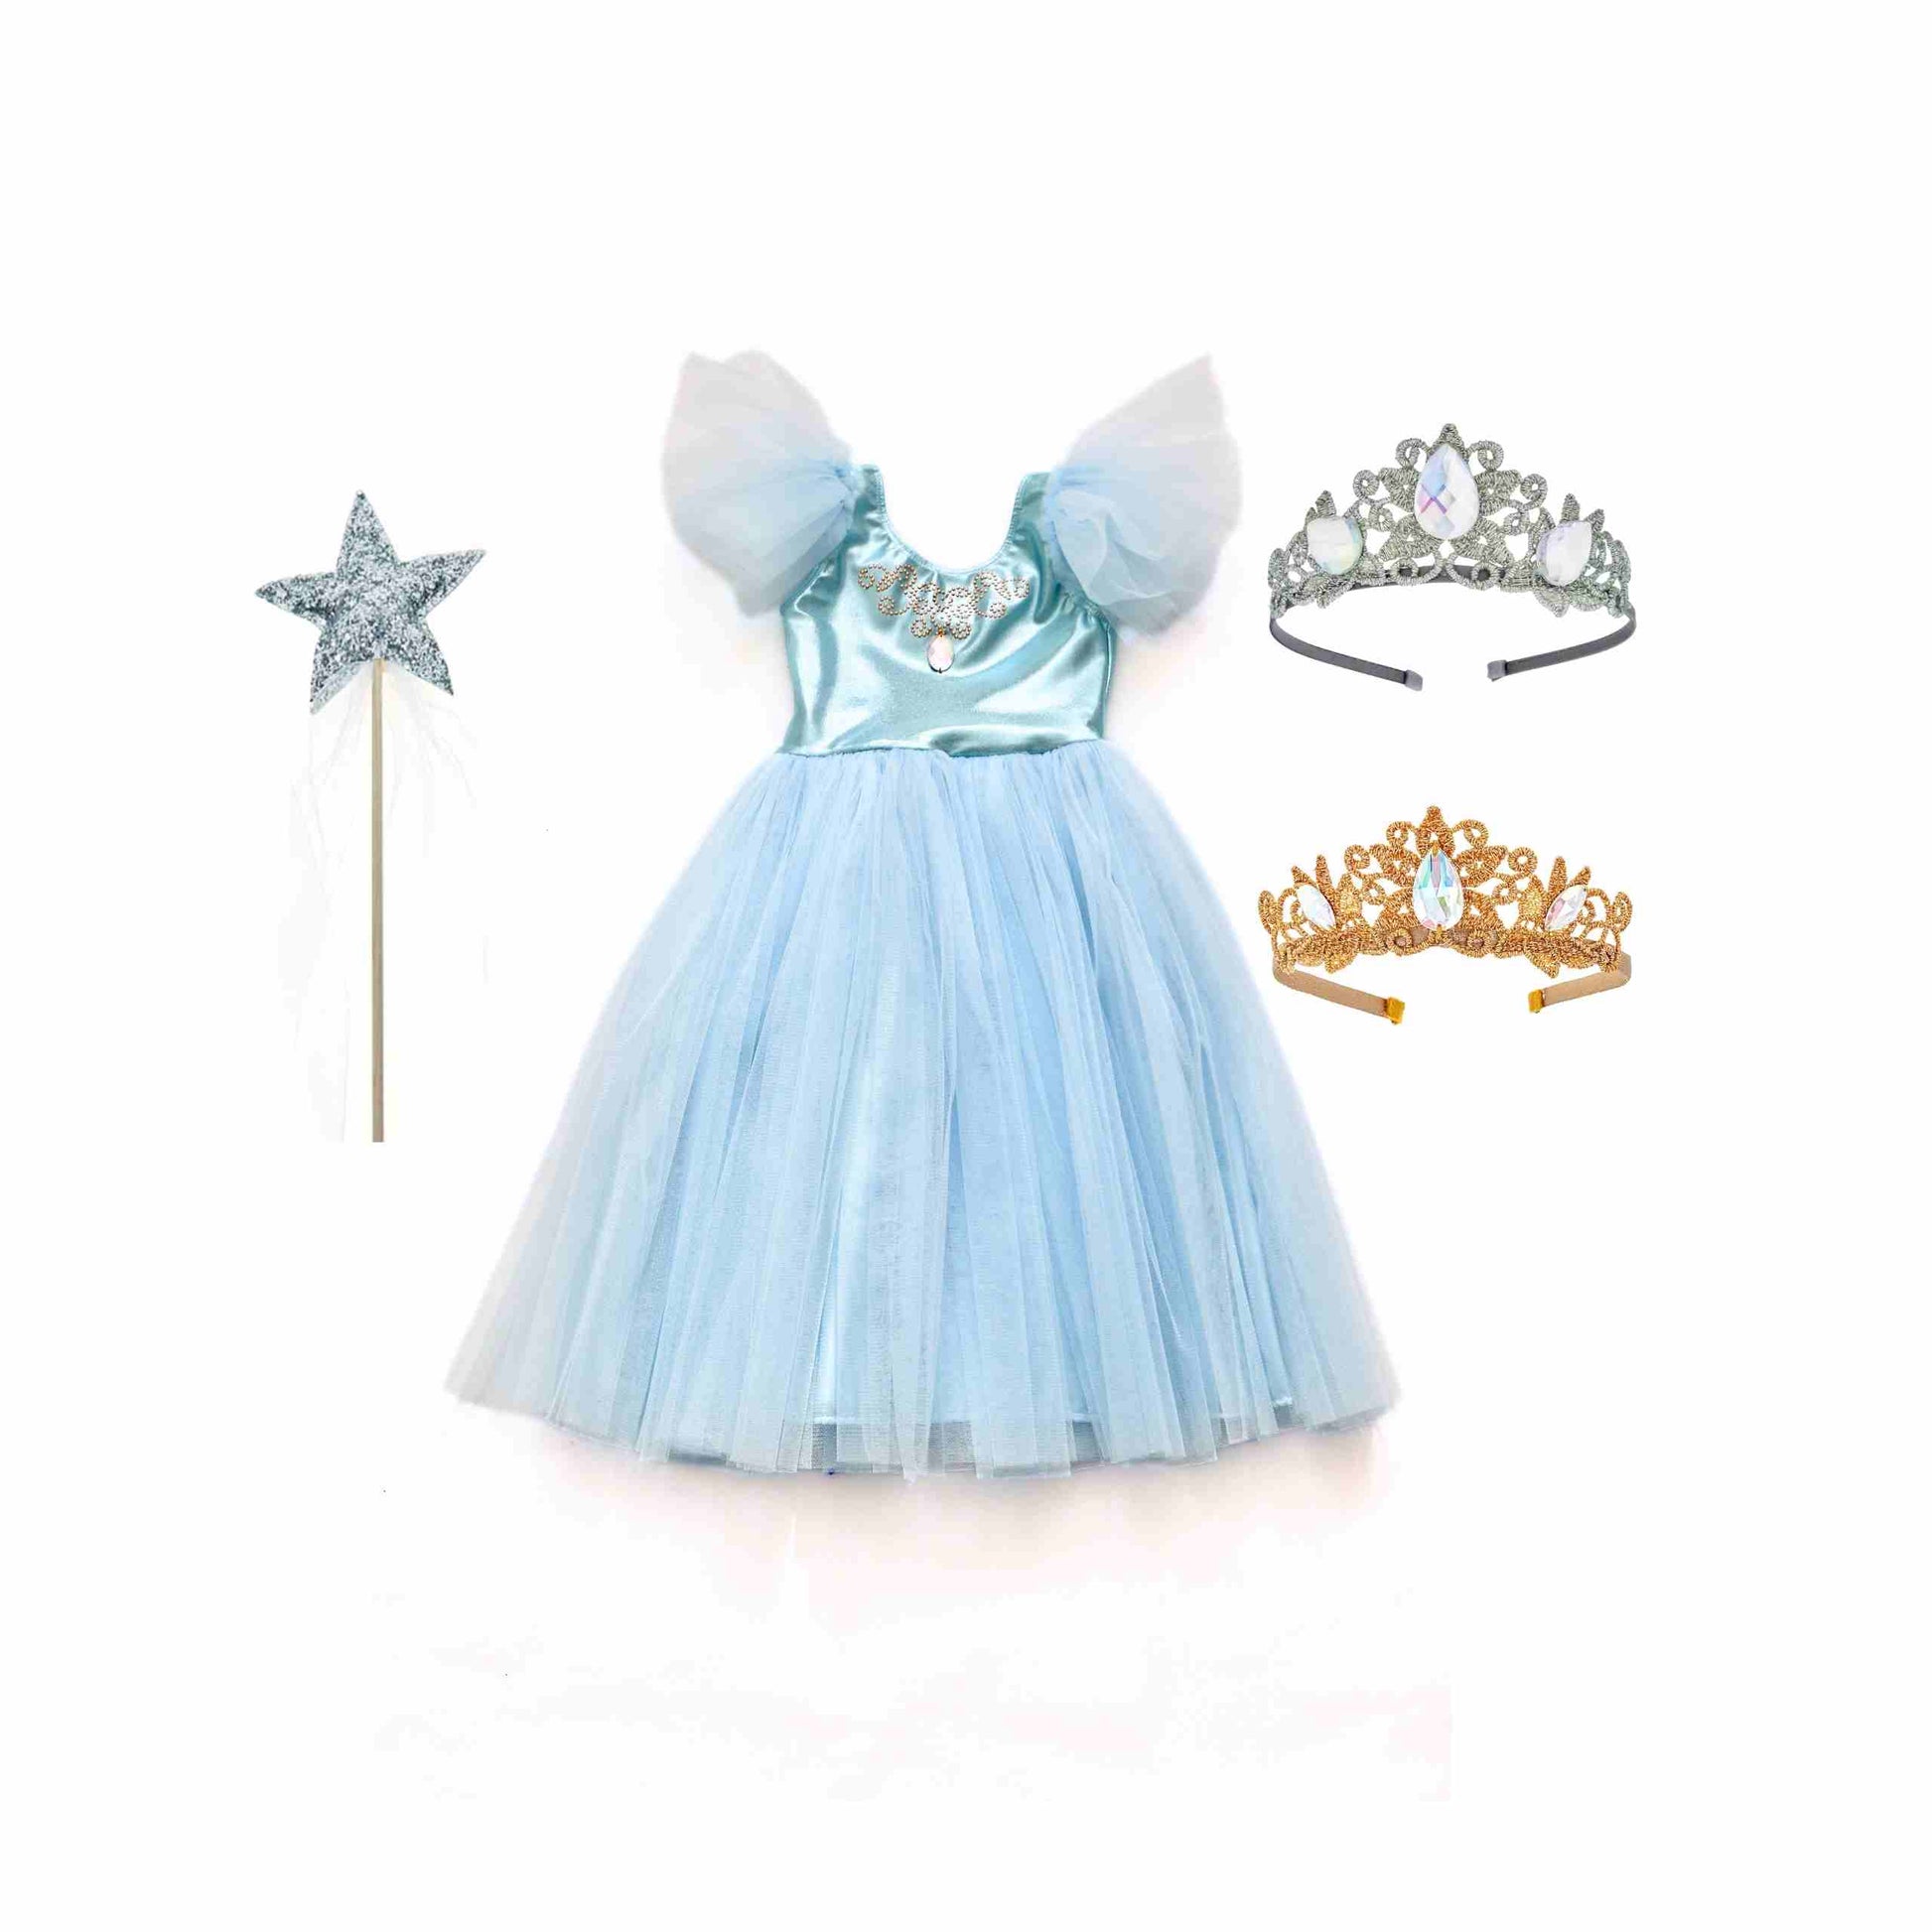 a little girl's blue dress and tiara